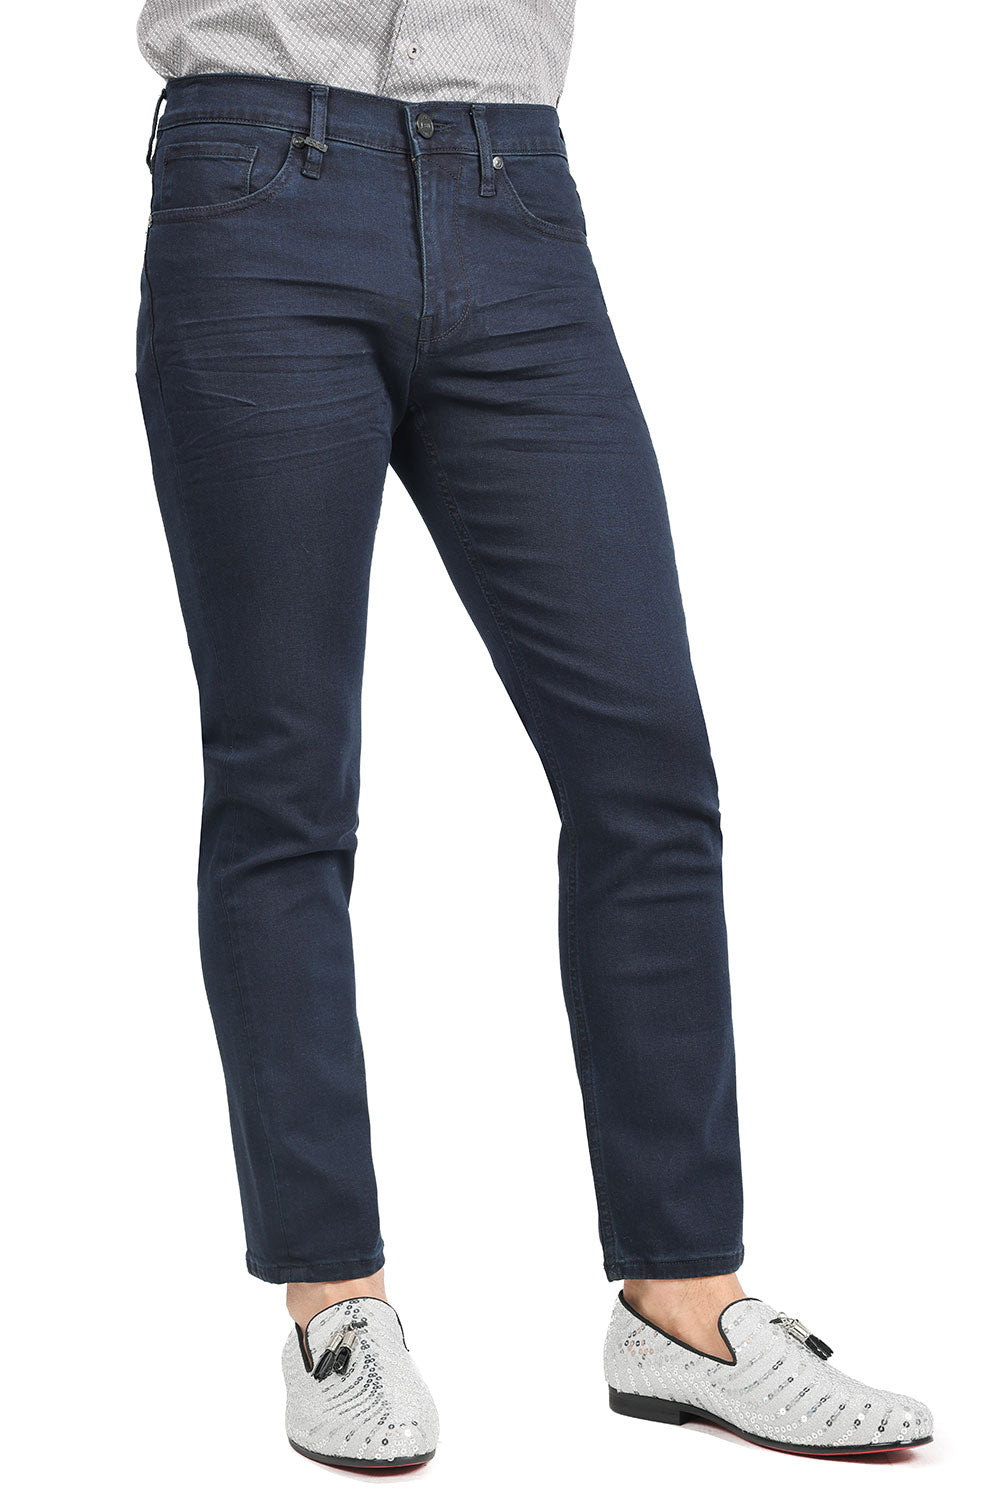 Barabas Men's Straight Fit Premium Dark Blue Denim Jeans 2JE12SL Dark Blue